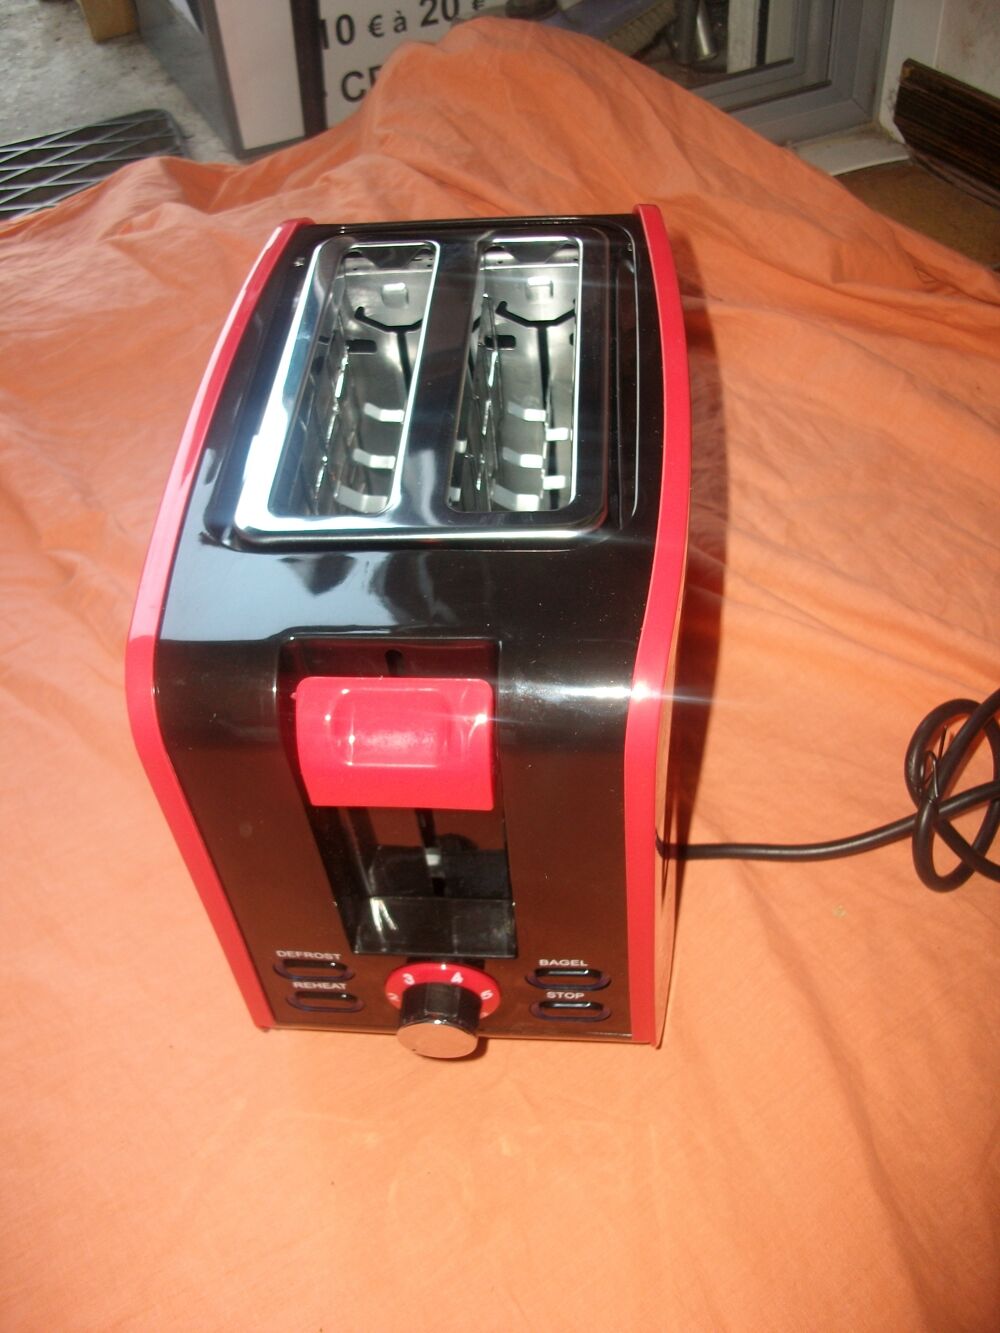 Grille-Pain Double/Toaster Double Fente-neuf, jamais servi Electromnager